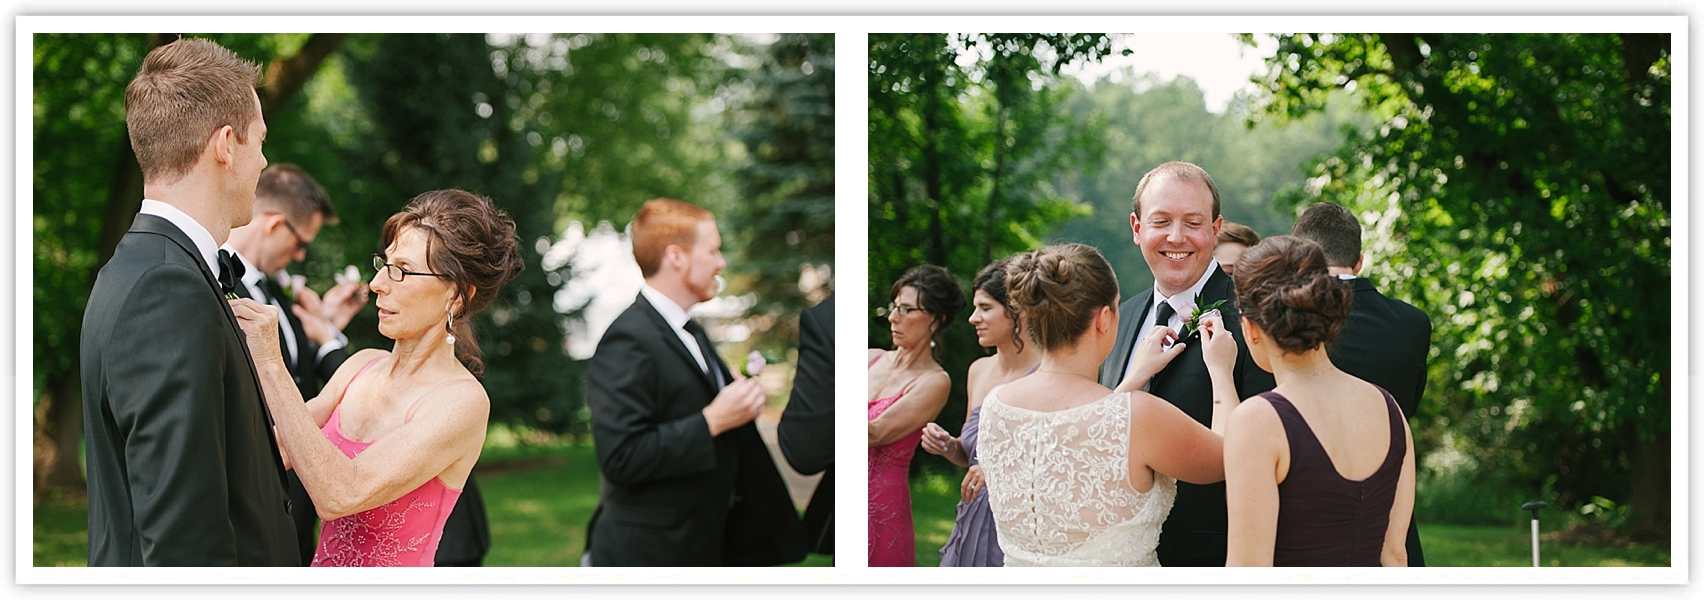 lansing_michigan_photographers_backyard_wedding_ideas_0020.jpg